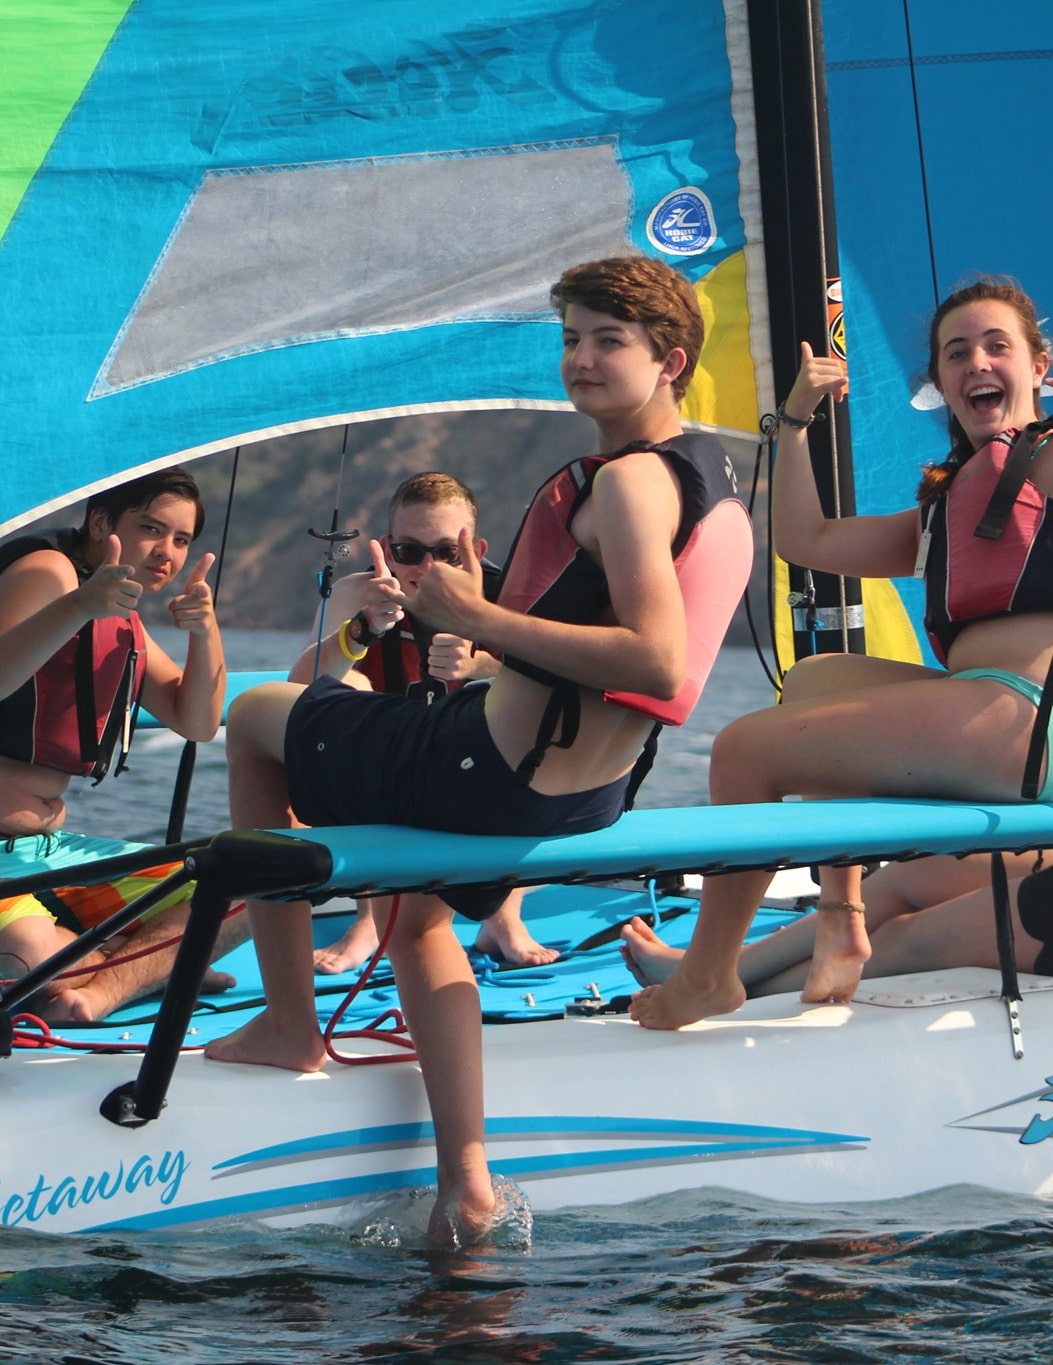 Teenage campers riding a catamaran in the ocean at Catalina Sea Camp